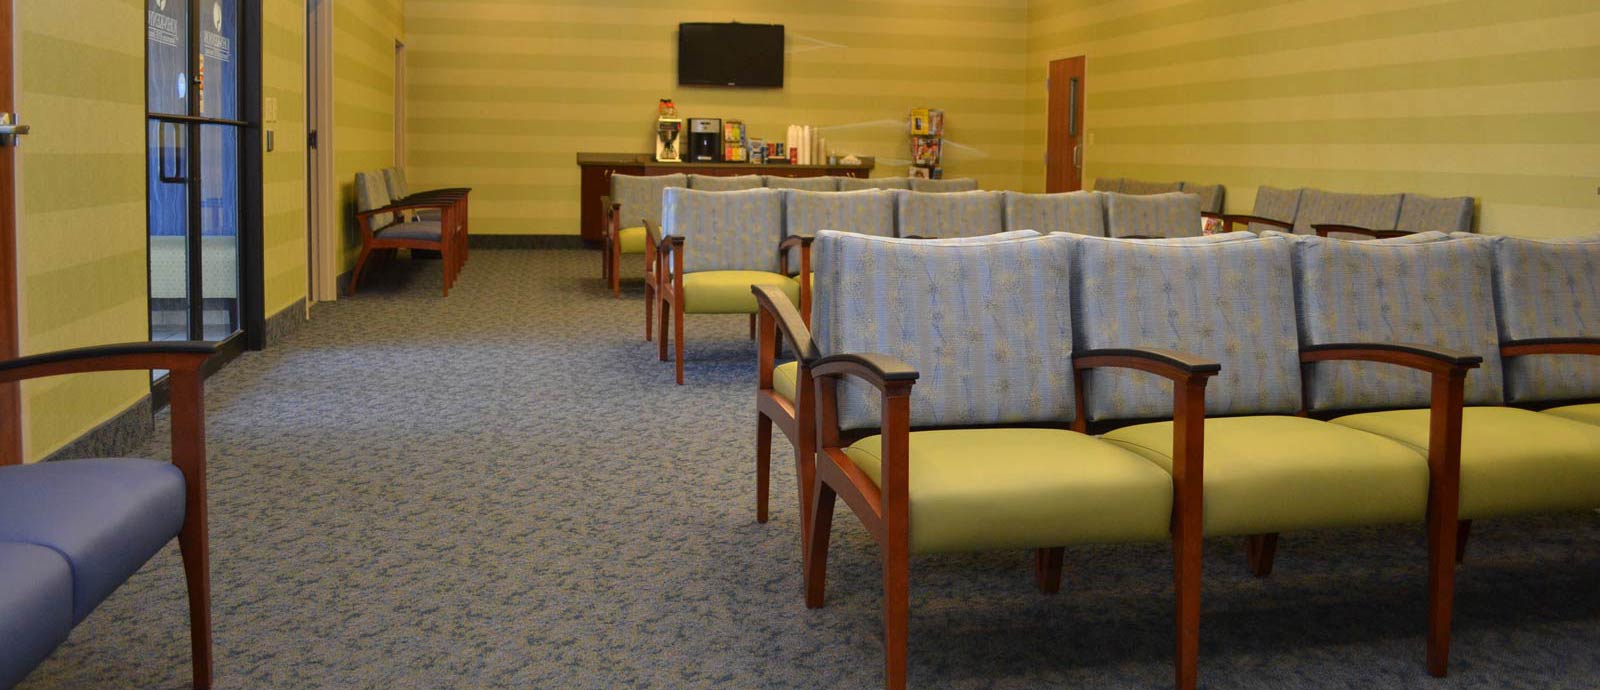 Healthcare Facility Development - Waiting Room - McRae Enterprises